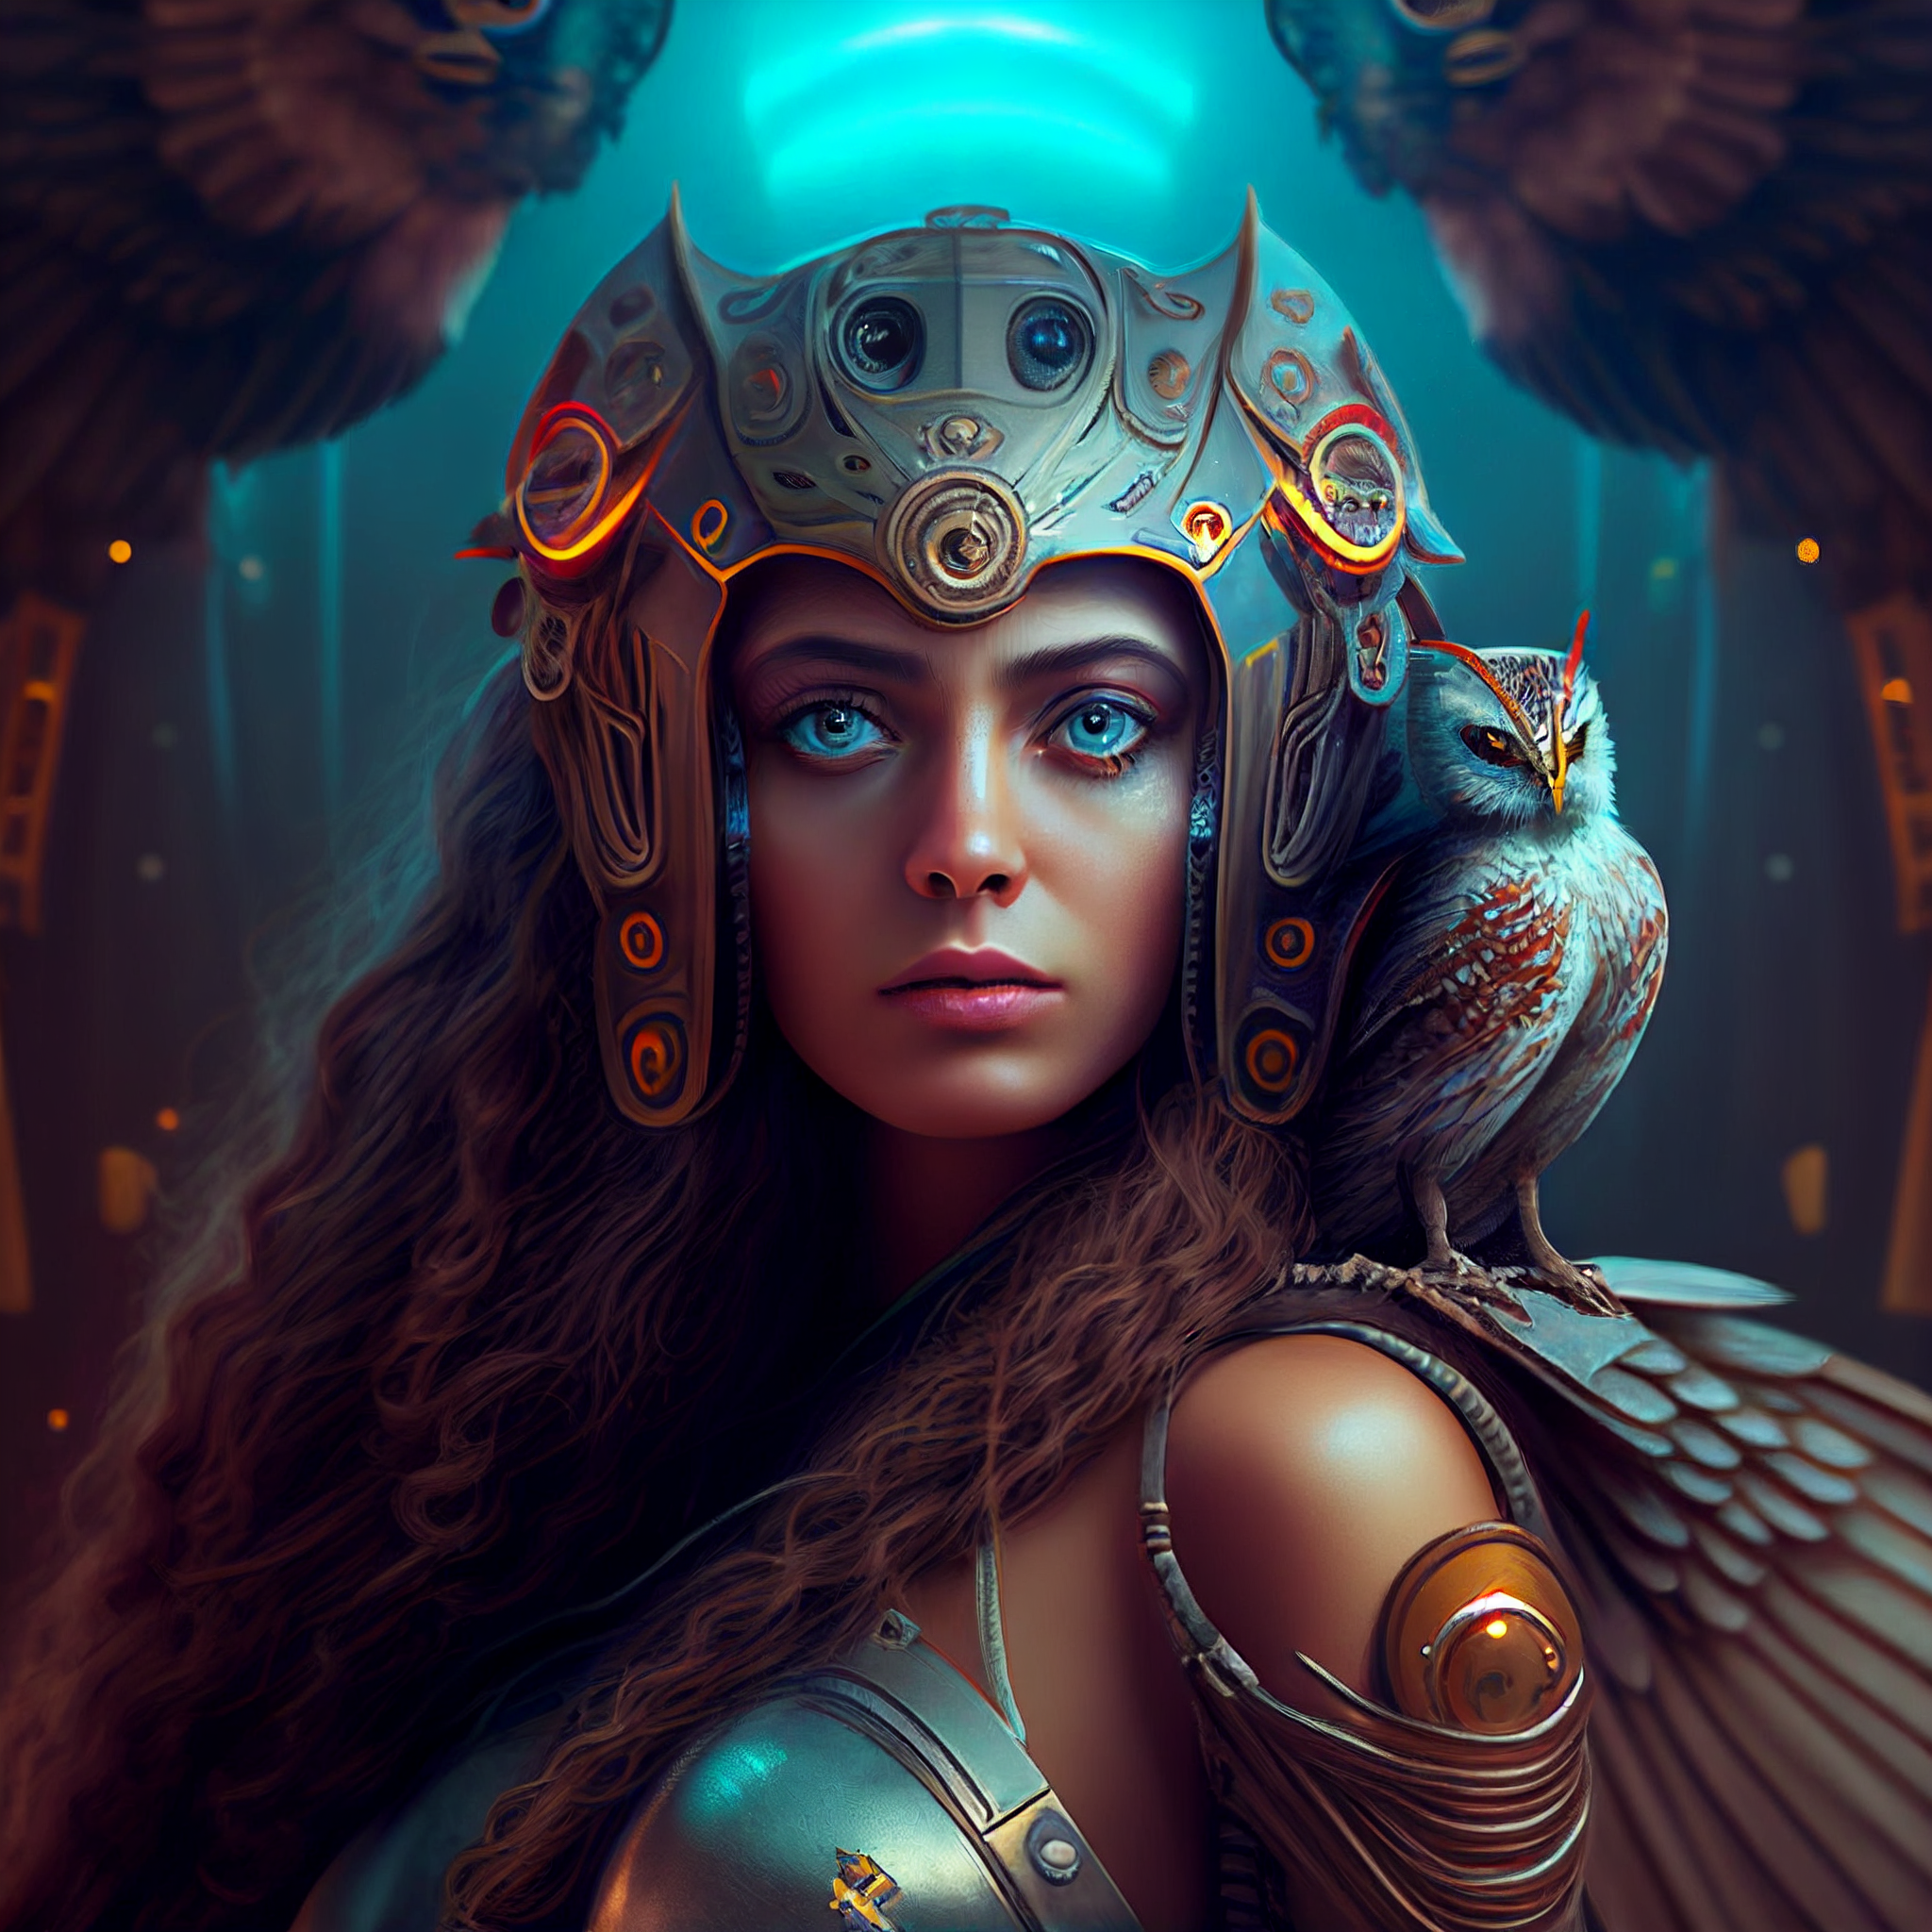 Athena, Goddess of War and Wisdom by ChrissaBug on DeviantArt